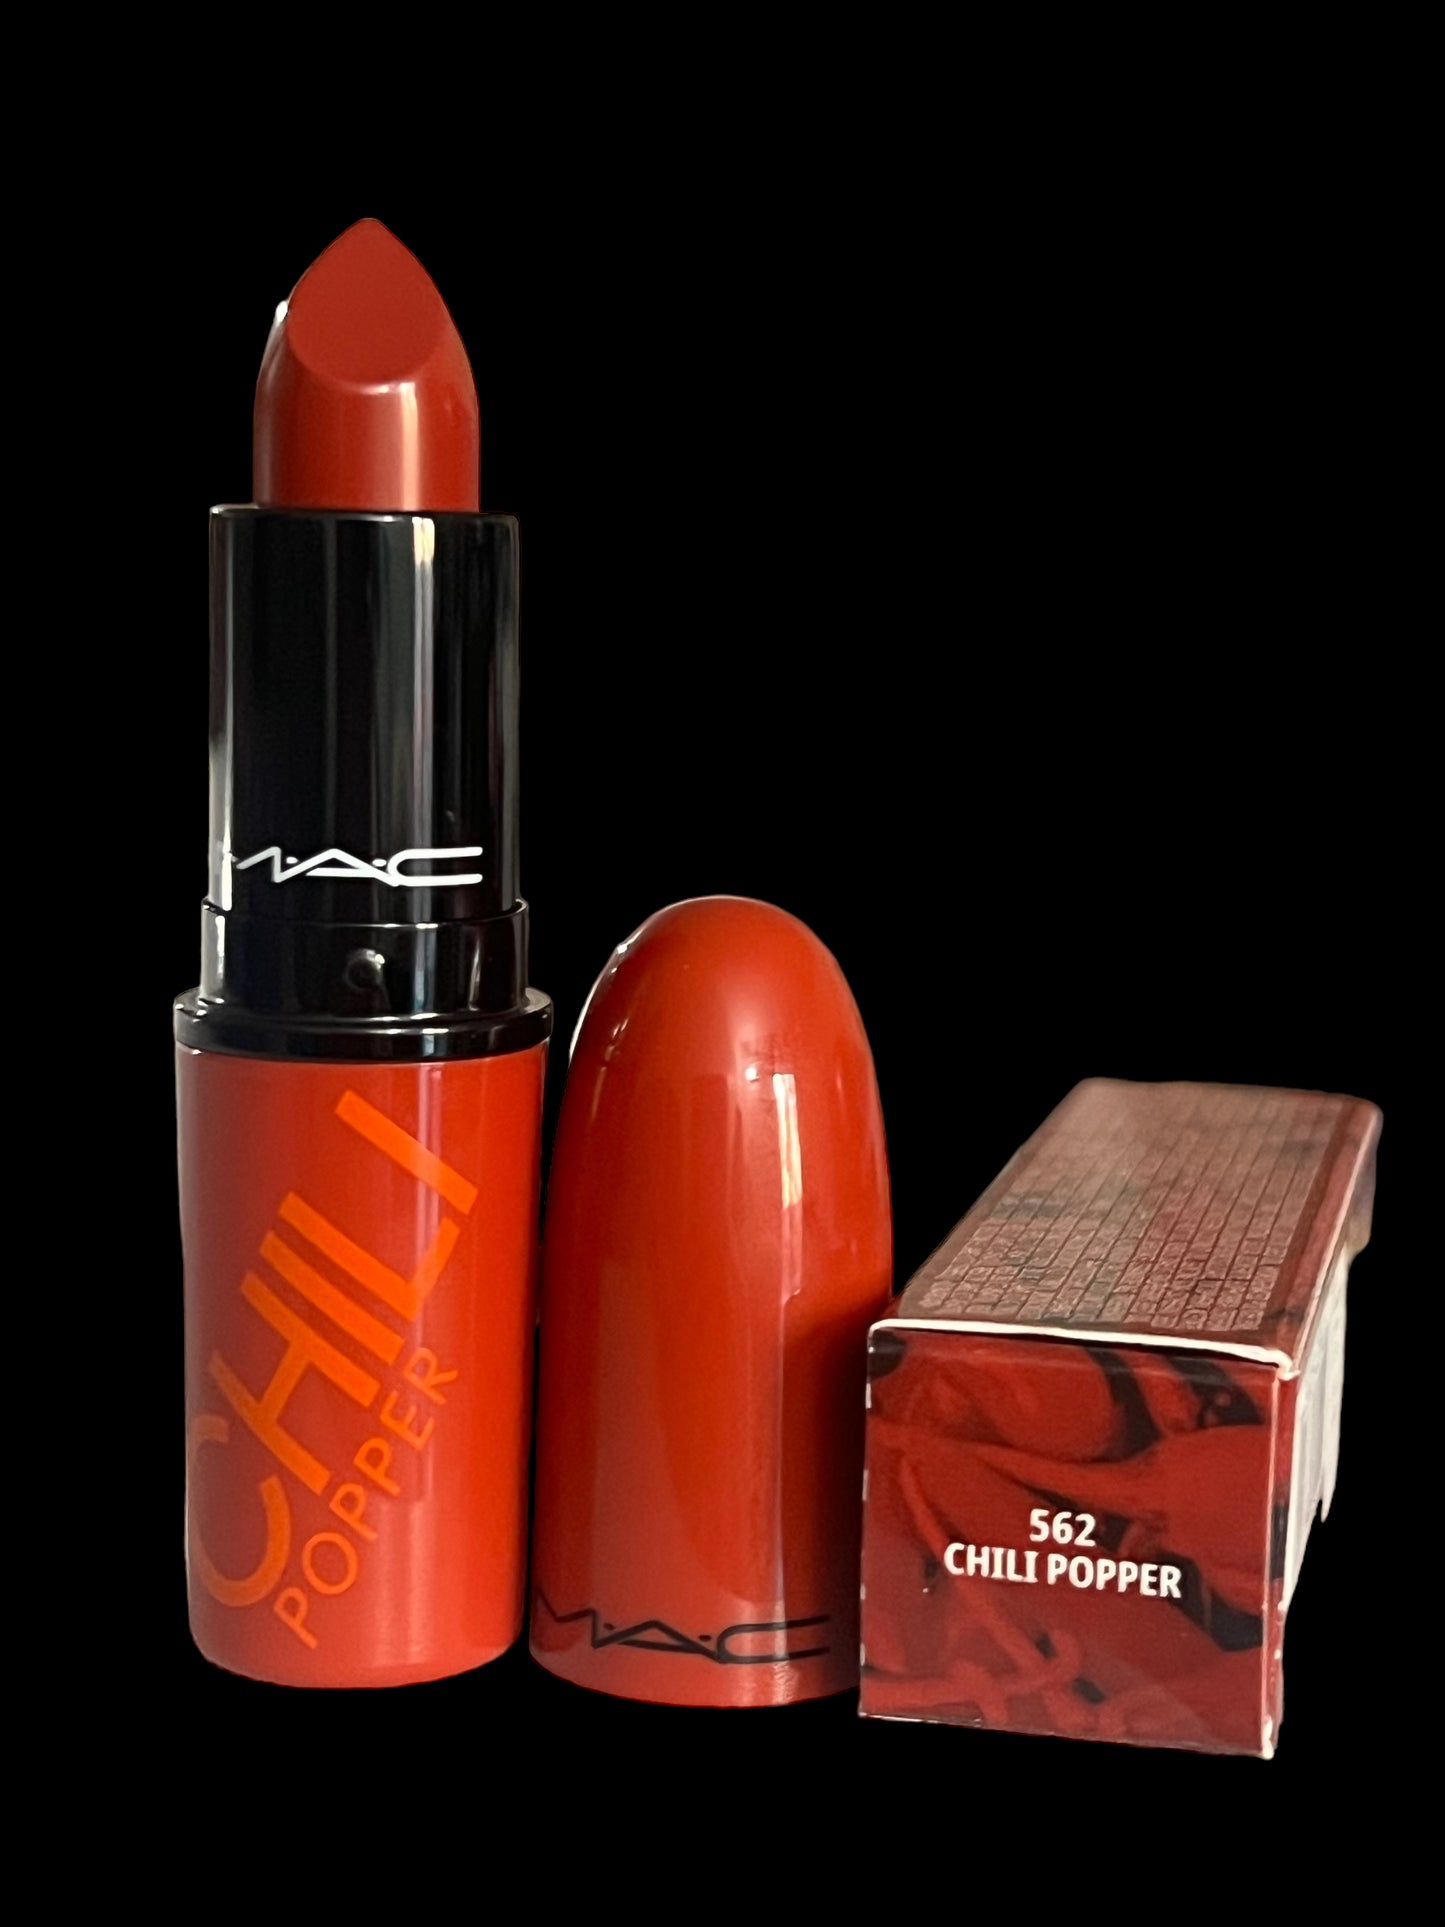 MAC Lustreglass Sheer Shine Lipstick